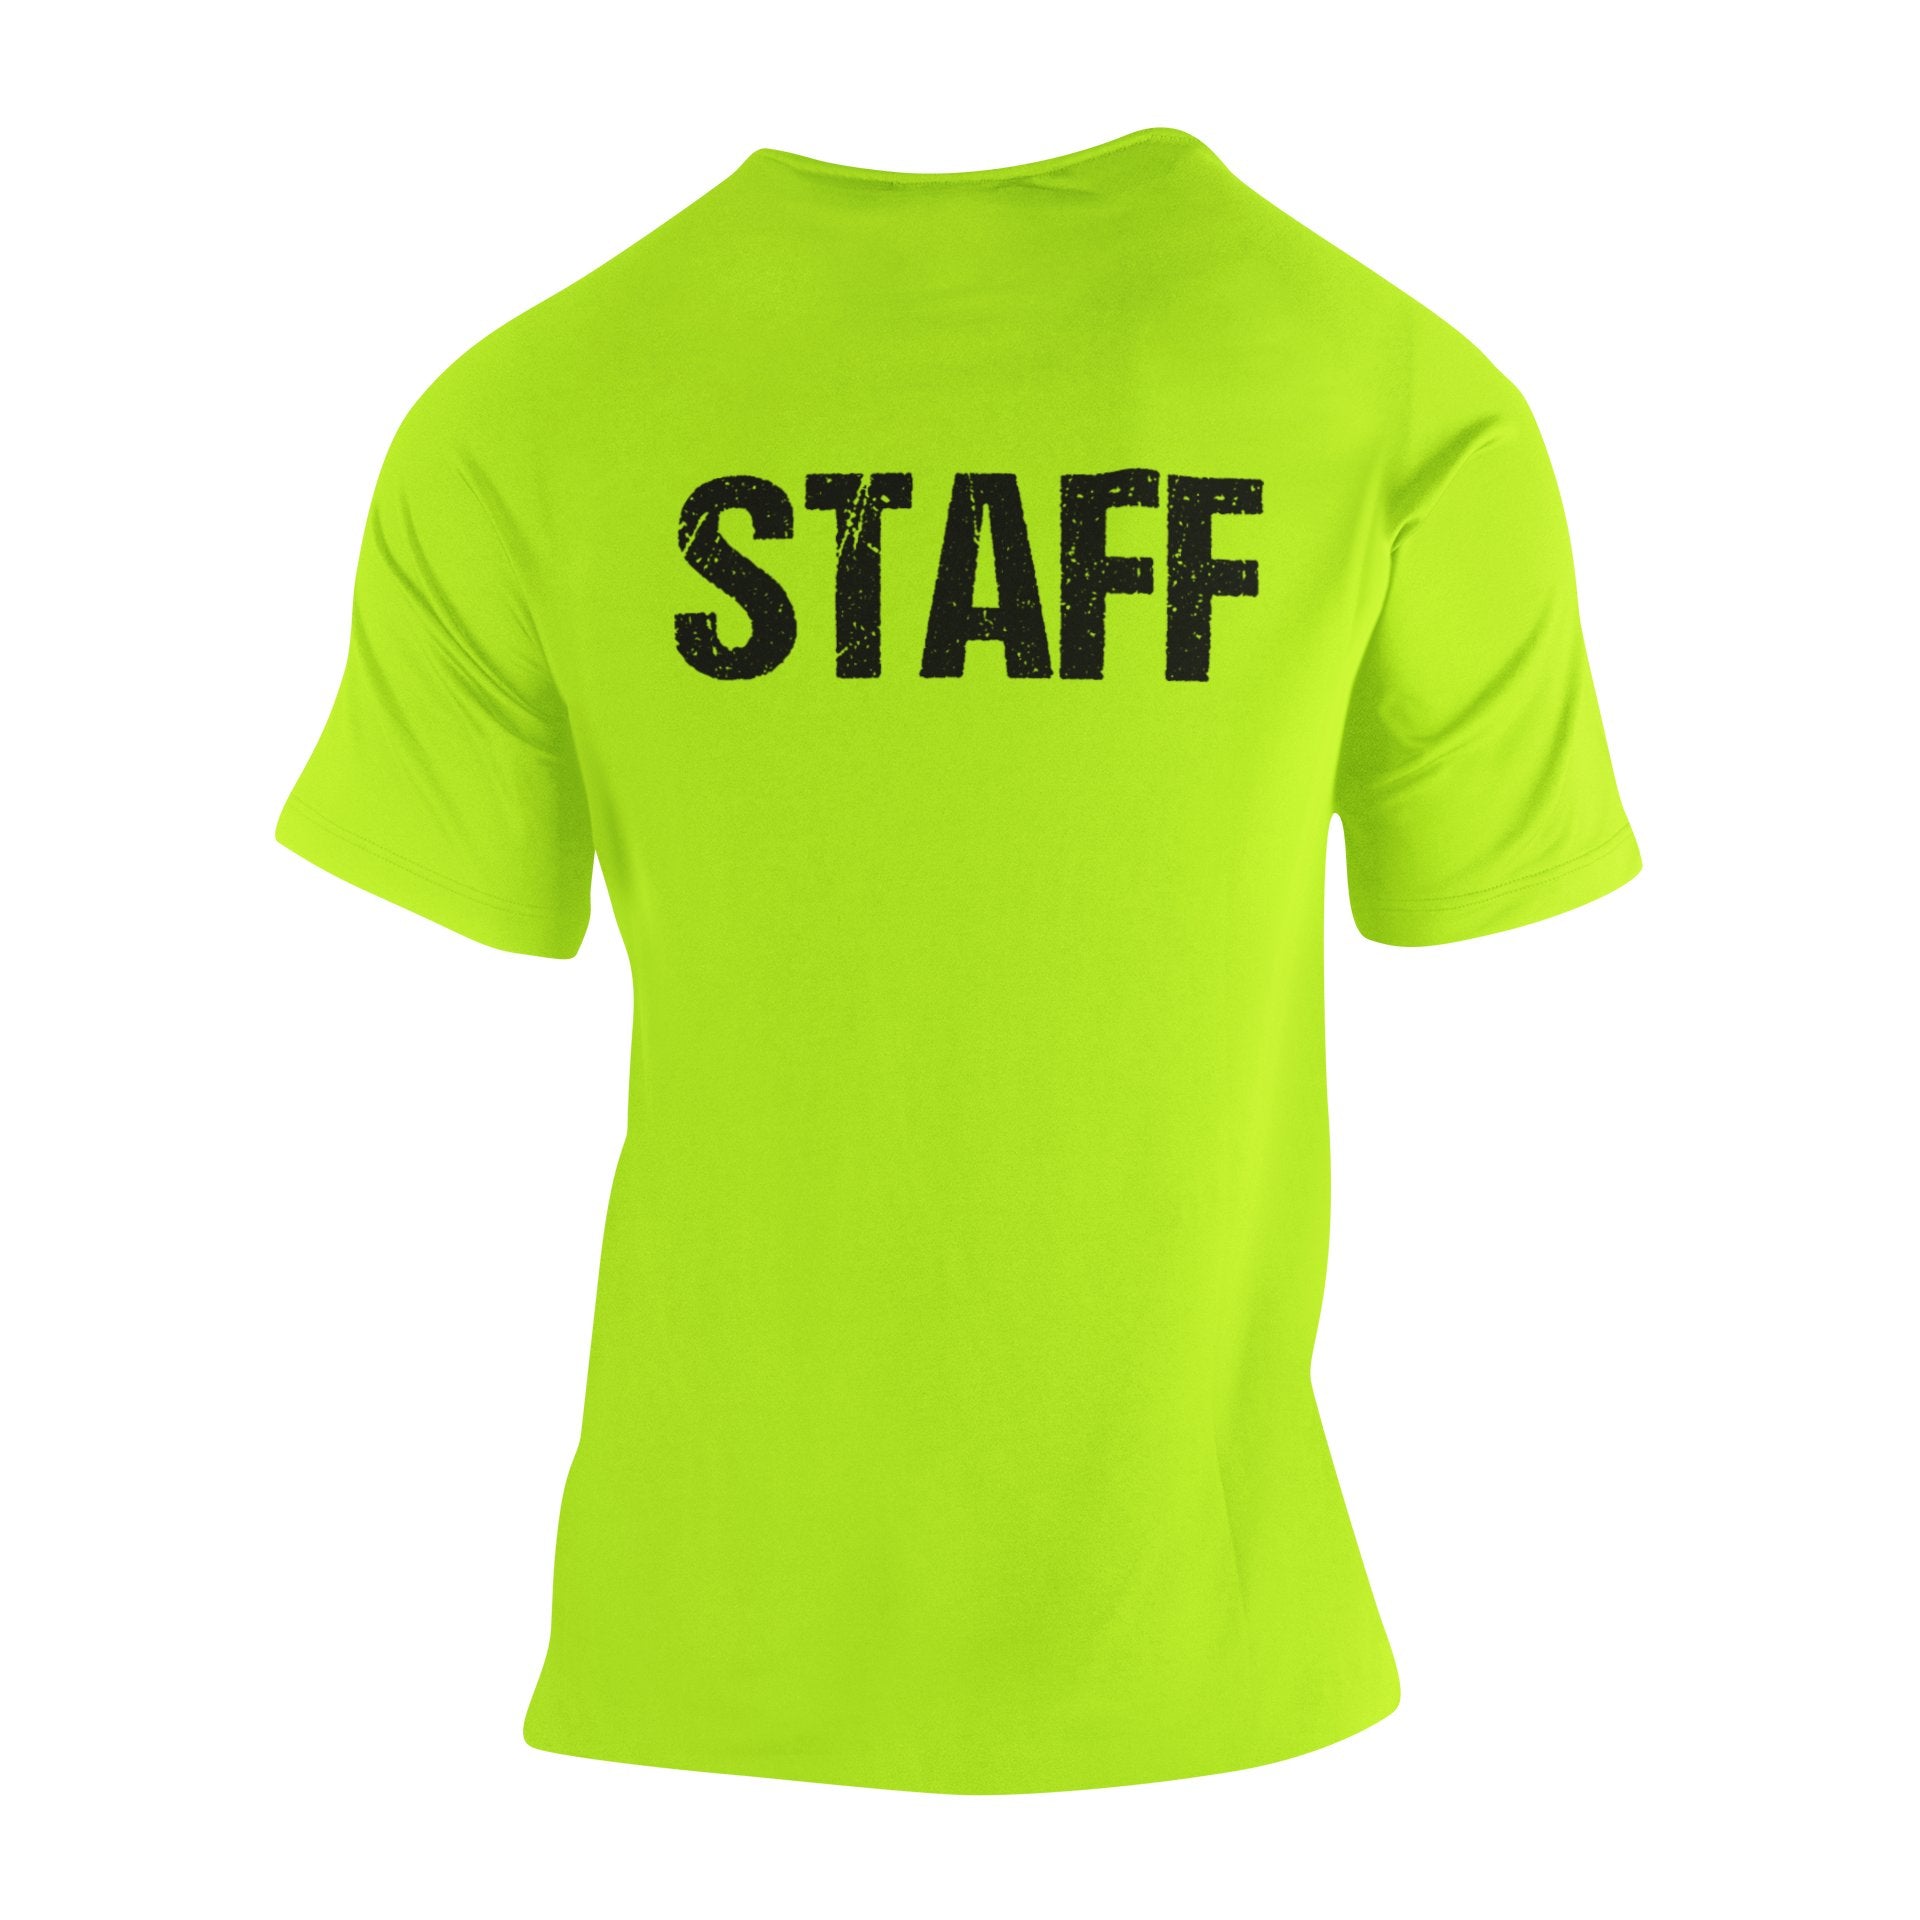 Men's Staff T-Shirt Front & Back Print (Distressed Design, Safety Green / Black)